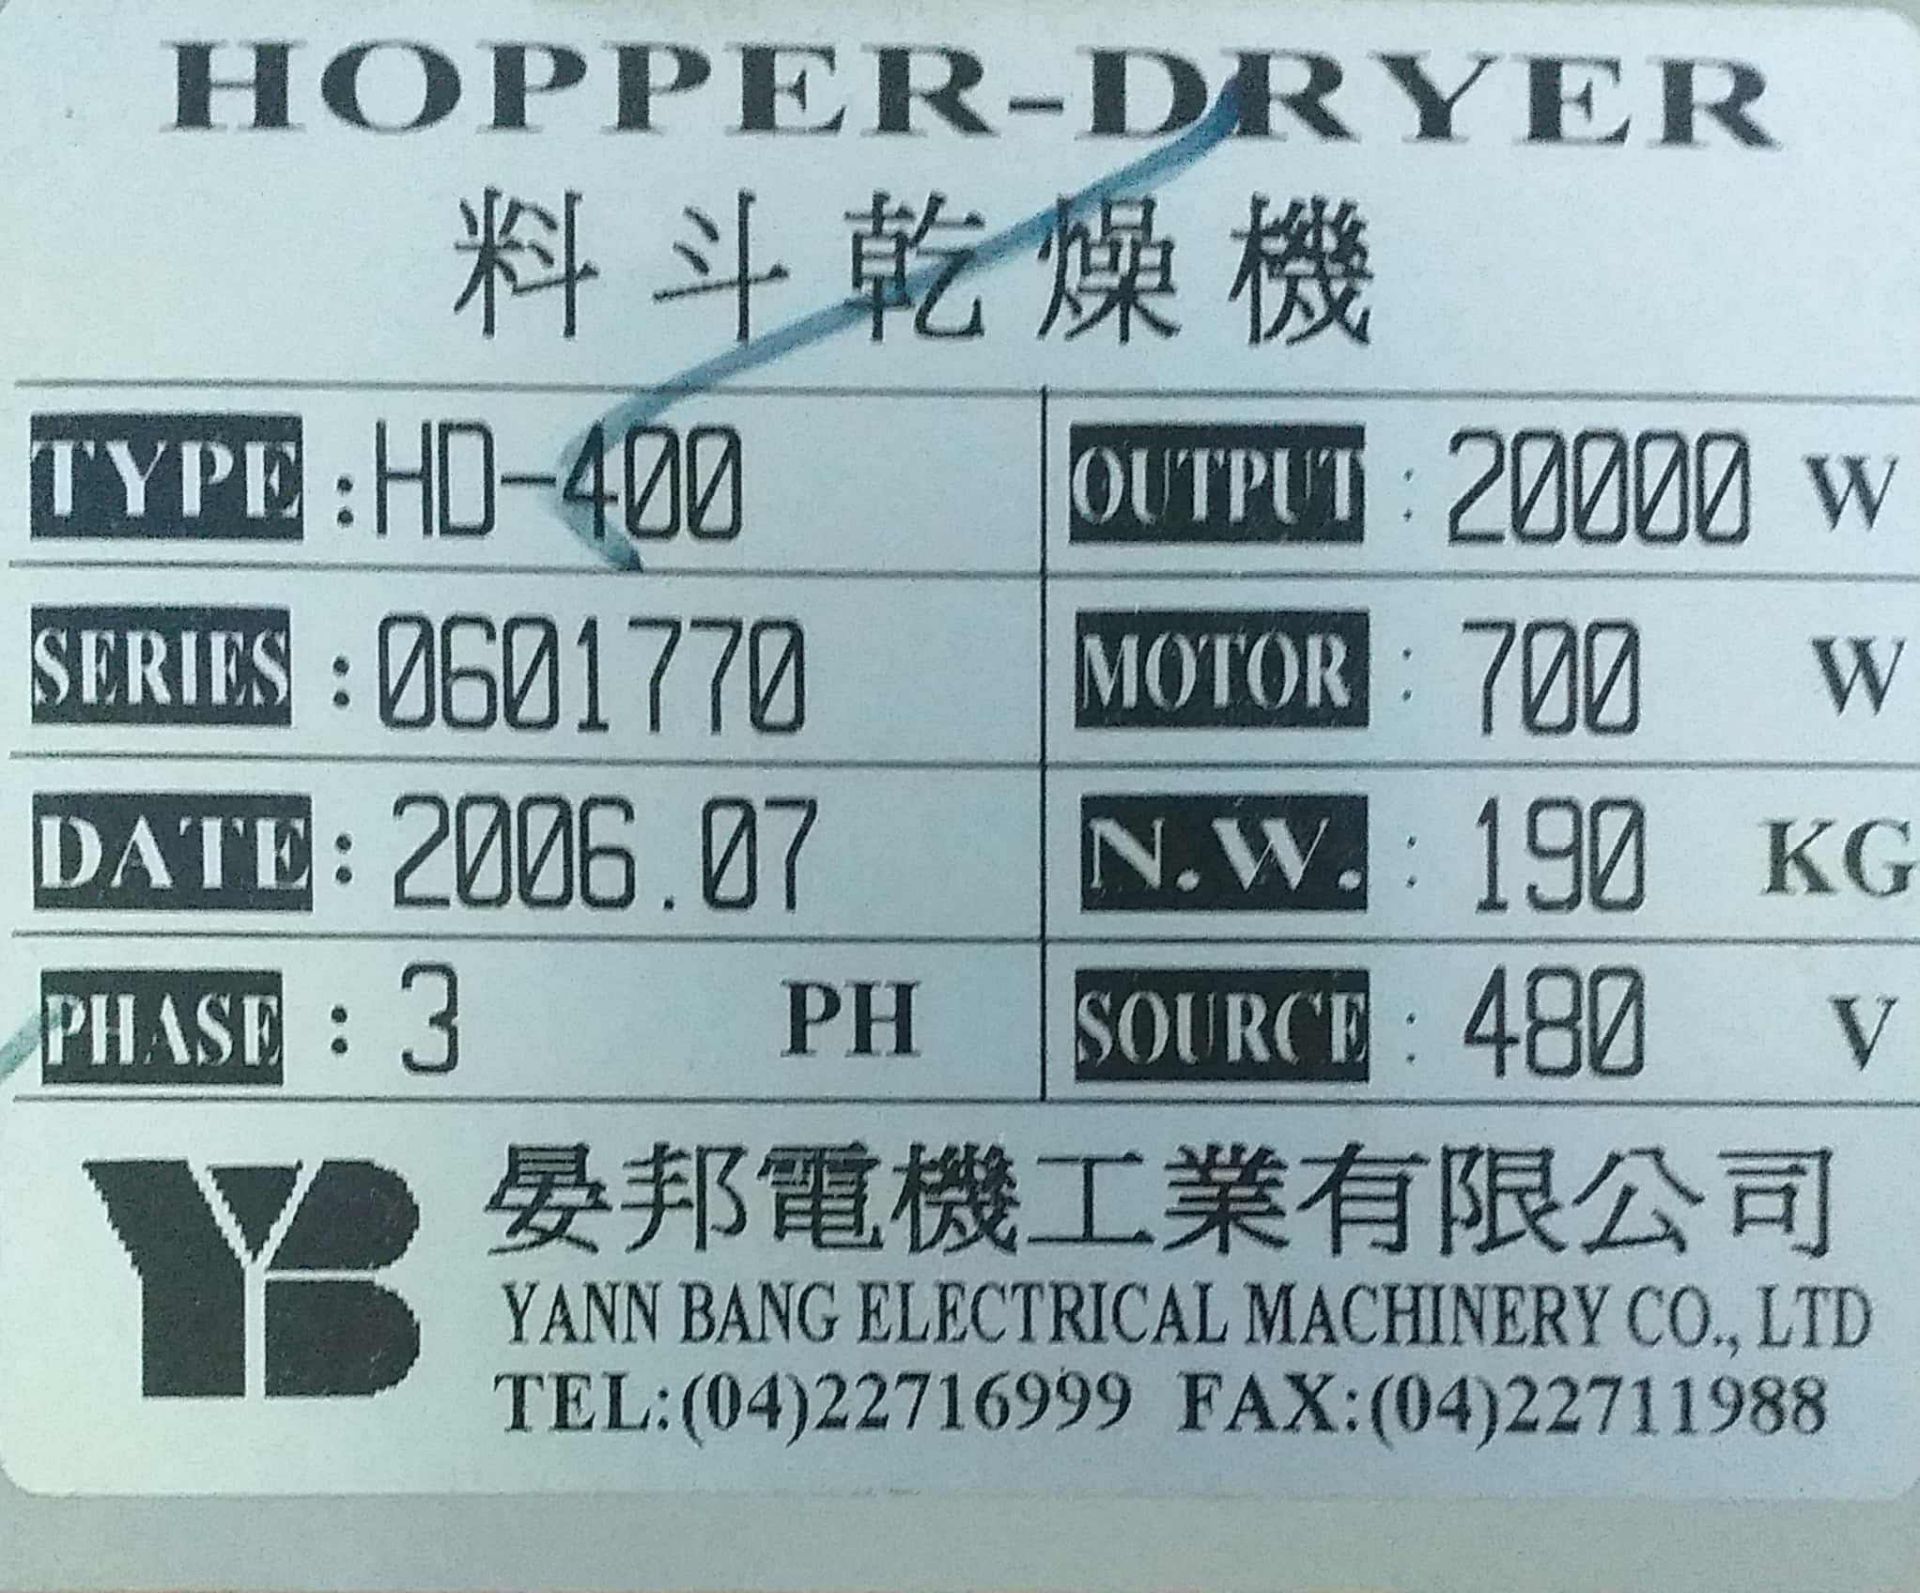 YANN BANG Hopper Dryer, Model HD-400, SN0601770, PH3, 480 volts. Ref #6 / Tolva para Secado - Image 2 of 2